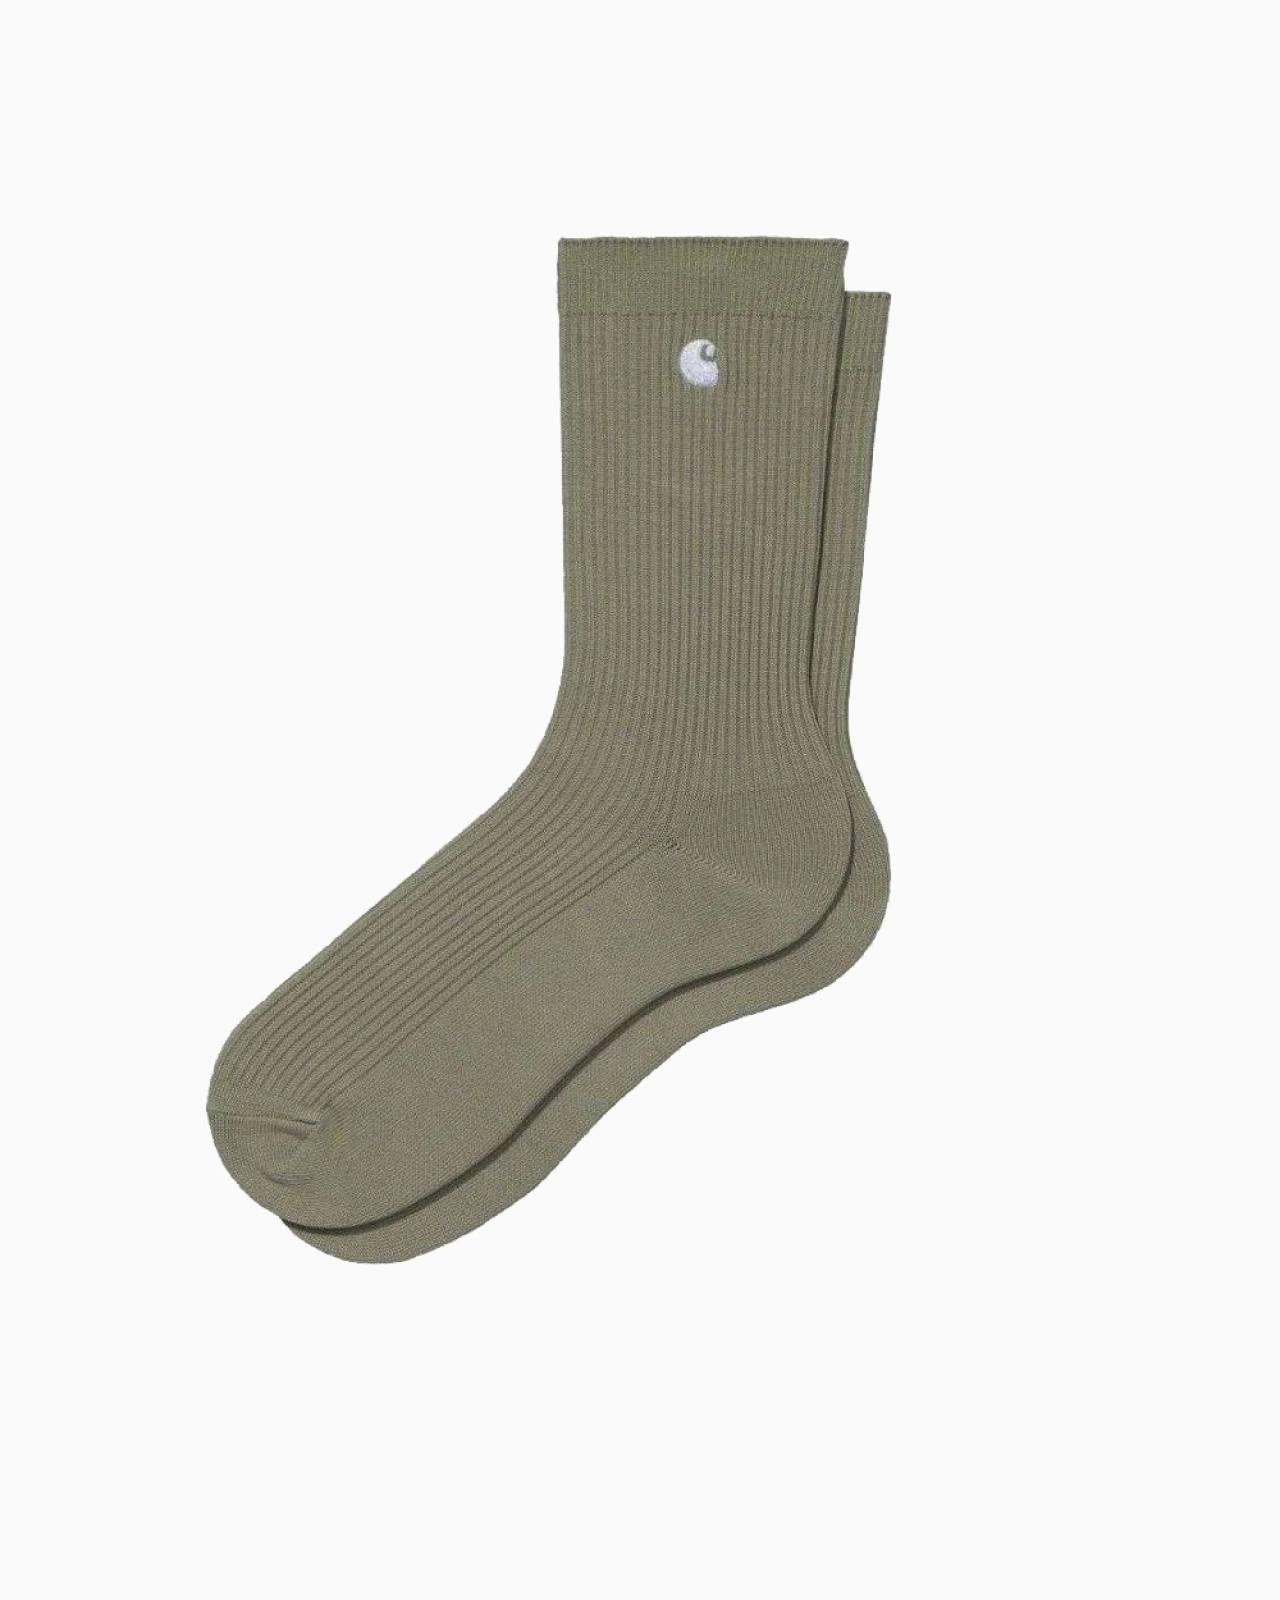 Carhartt Wip: Носки Carhartt Madison WIP Pack Socks (2шт/упак)